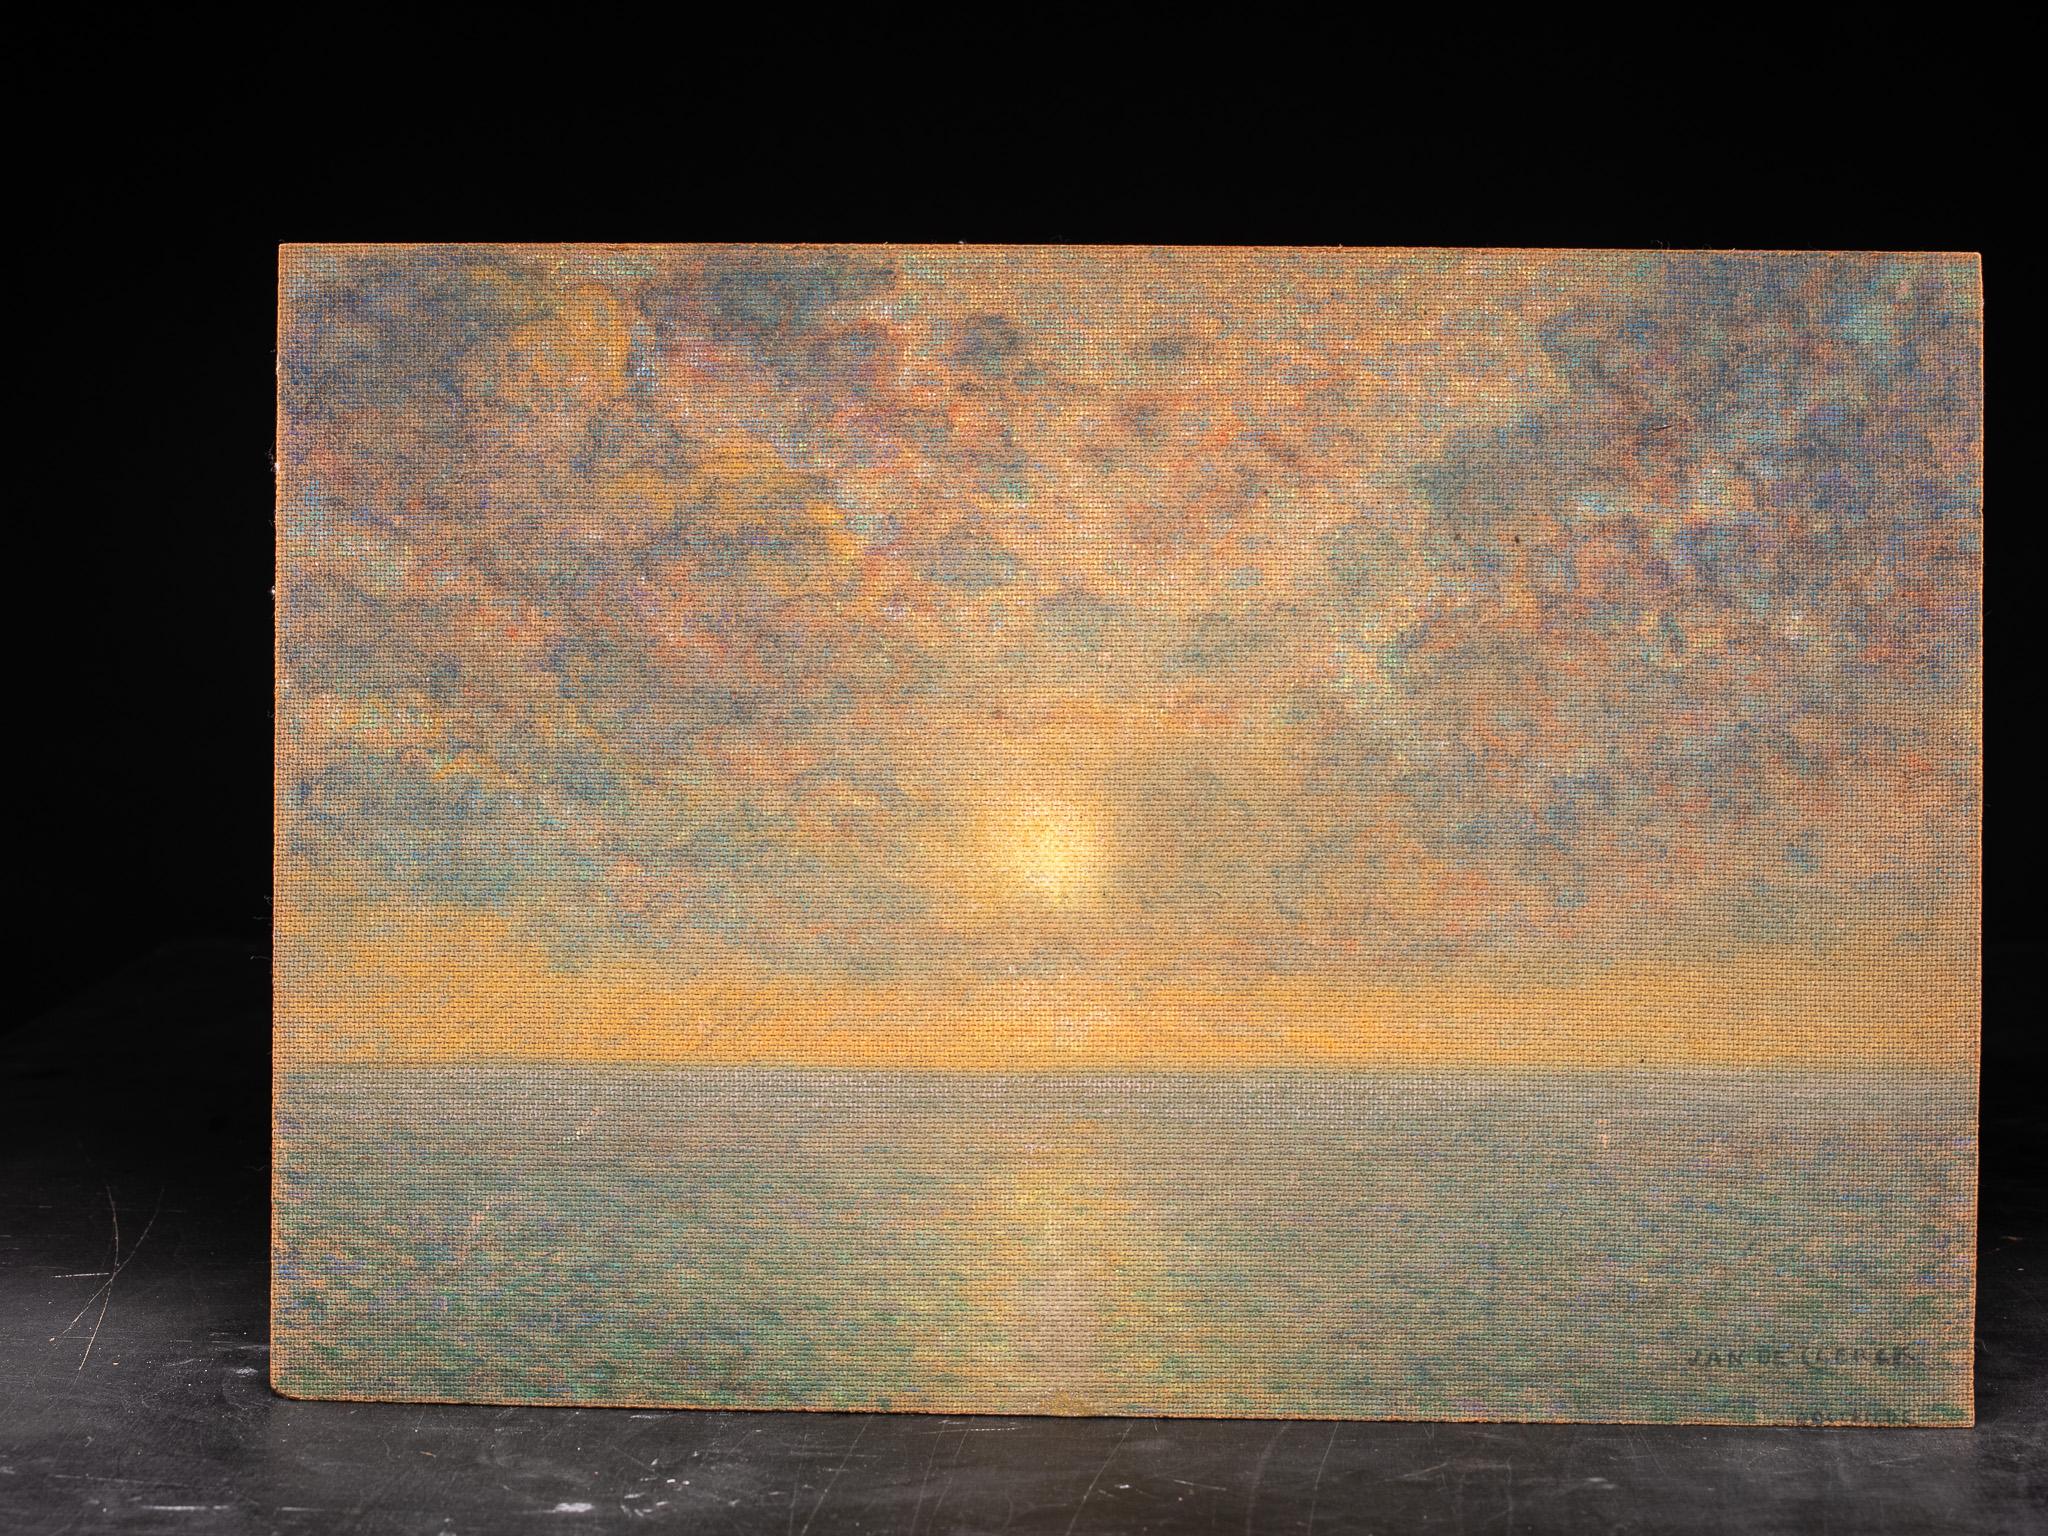 Sunset over the sea, Jan De Clerck (1891 - 1964), oil on canvas, signed.